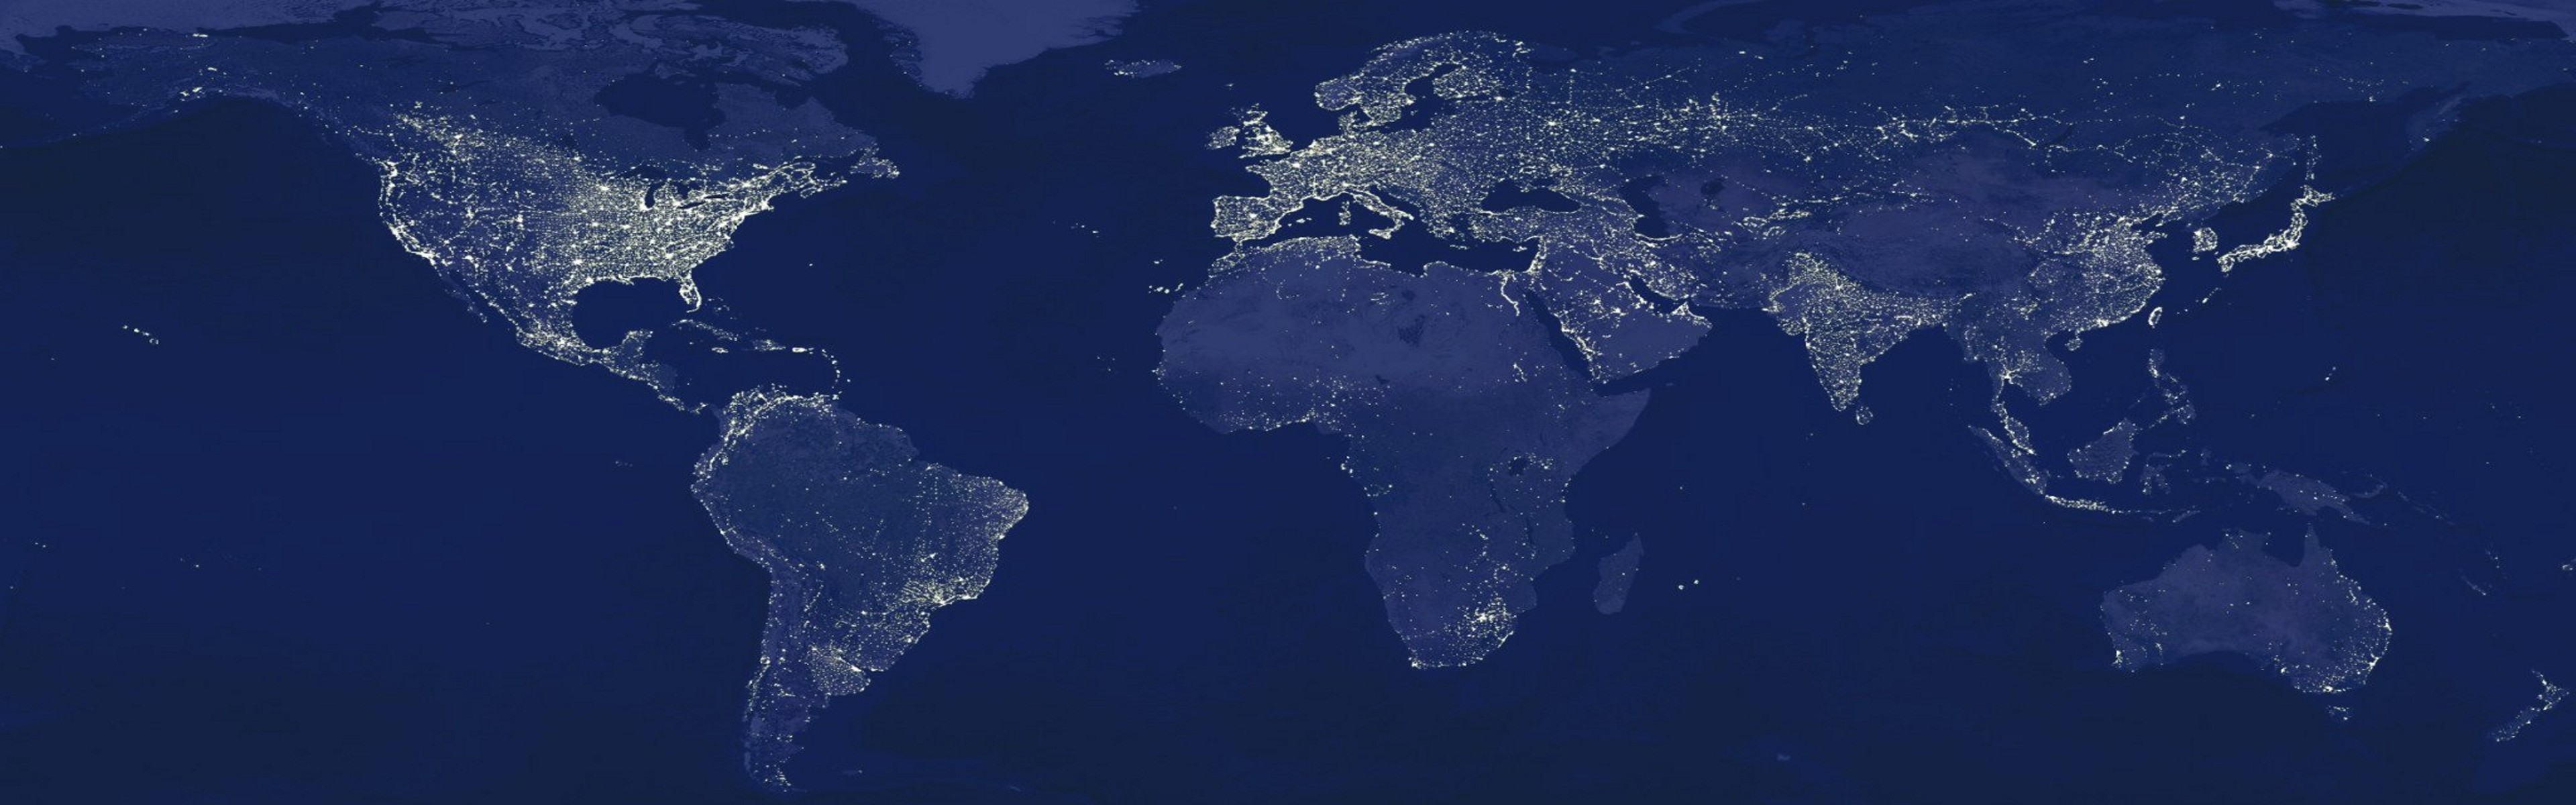 Light Night Earth Pollution Globes Maps World Map Globe